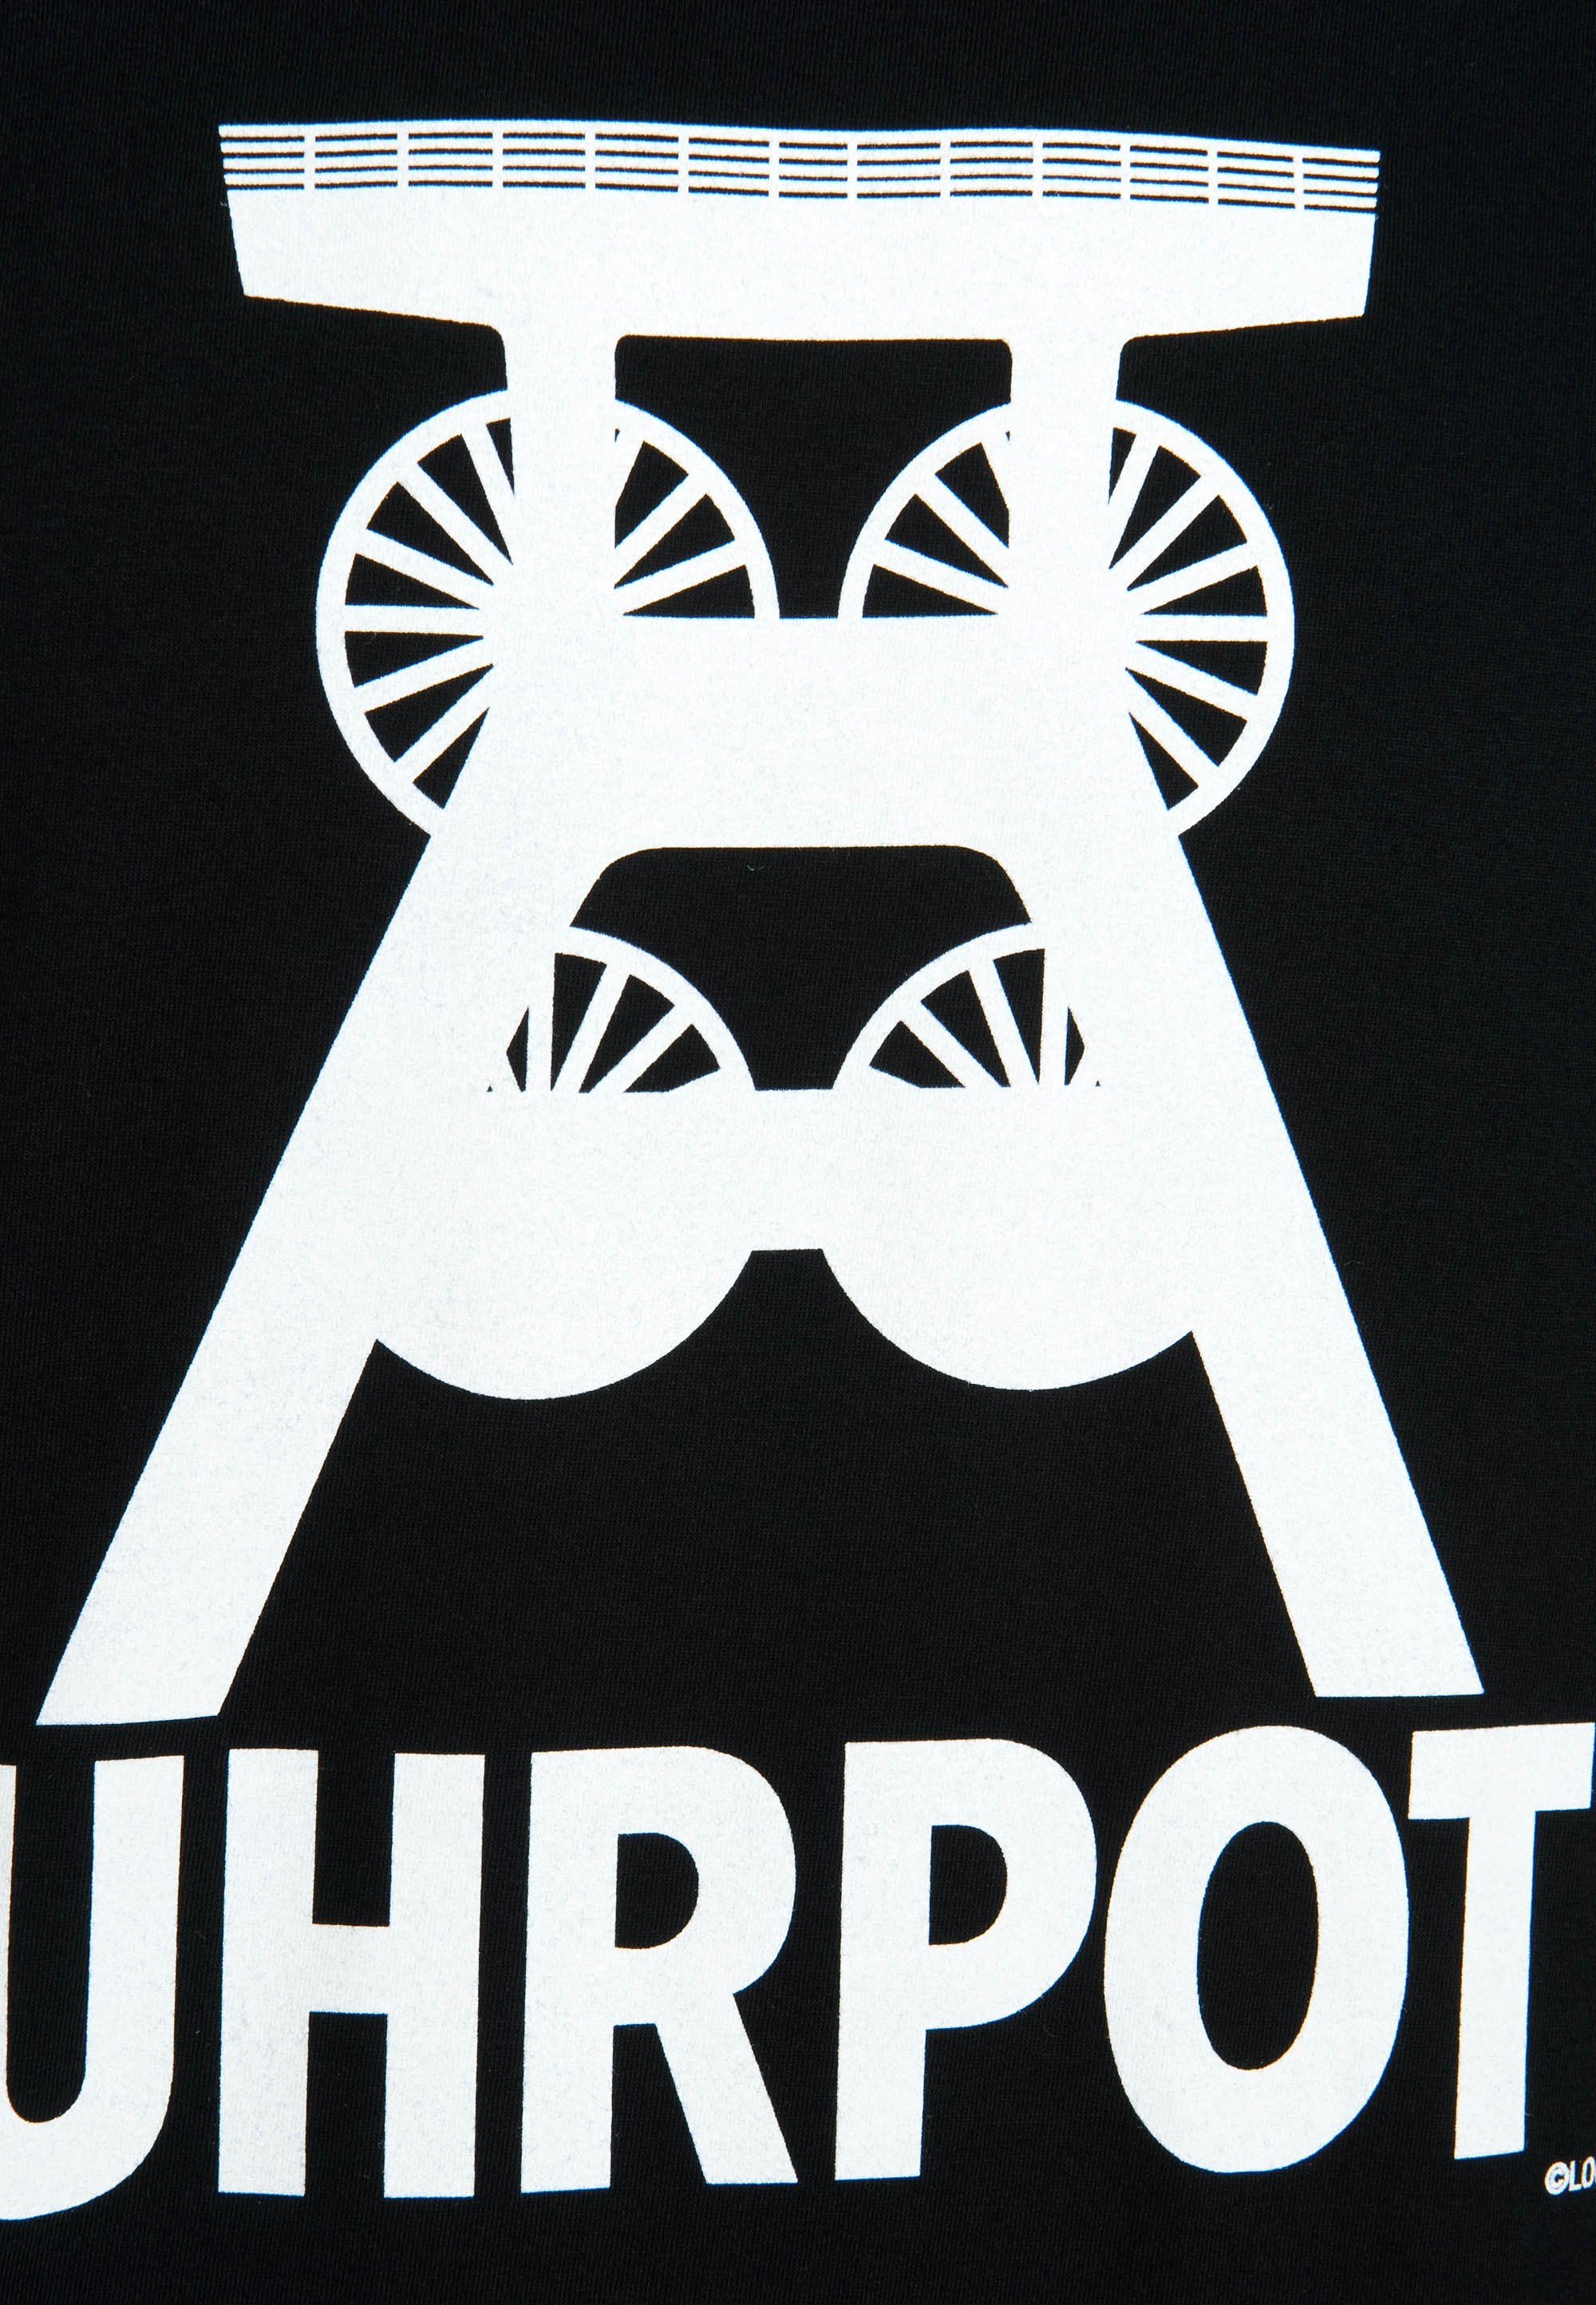 LOGOSHIRT T-Shirt Ruhrpott Logo mit Ruhrpott-Symbol